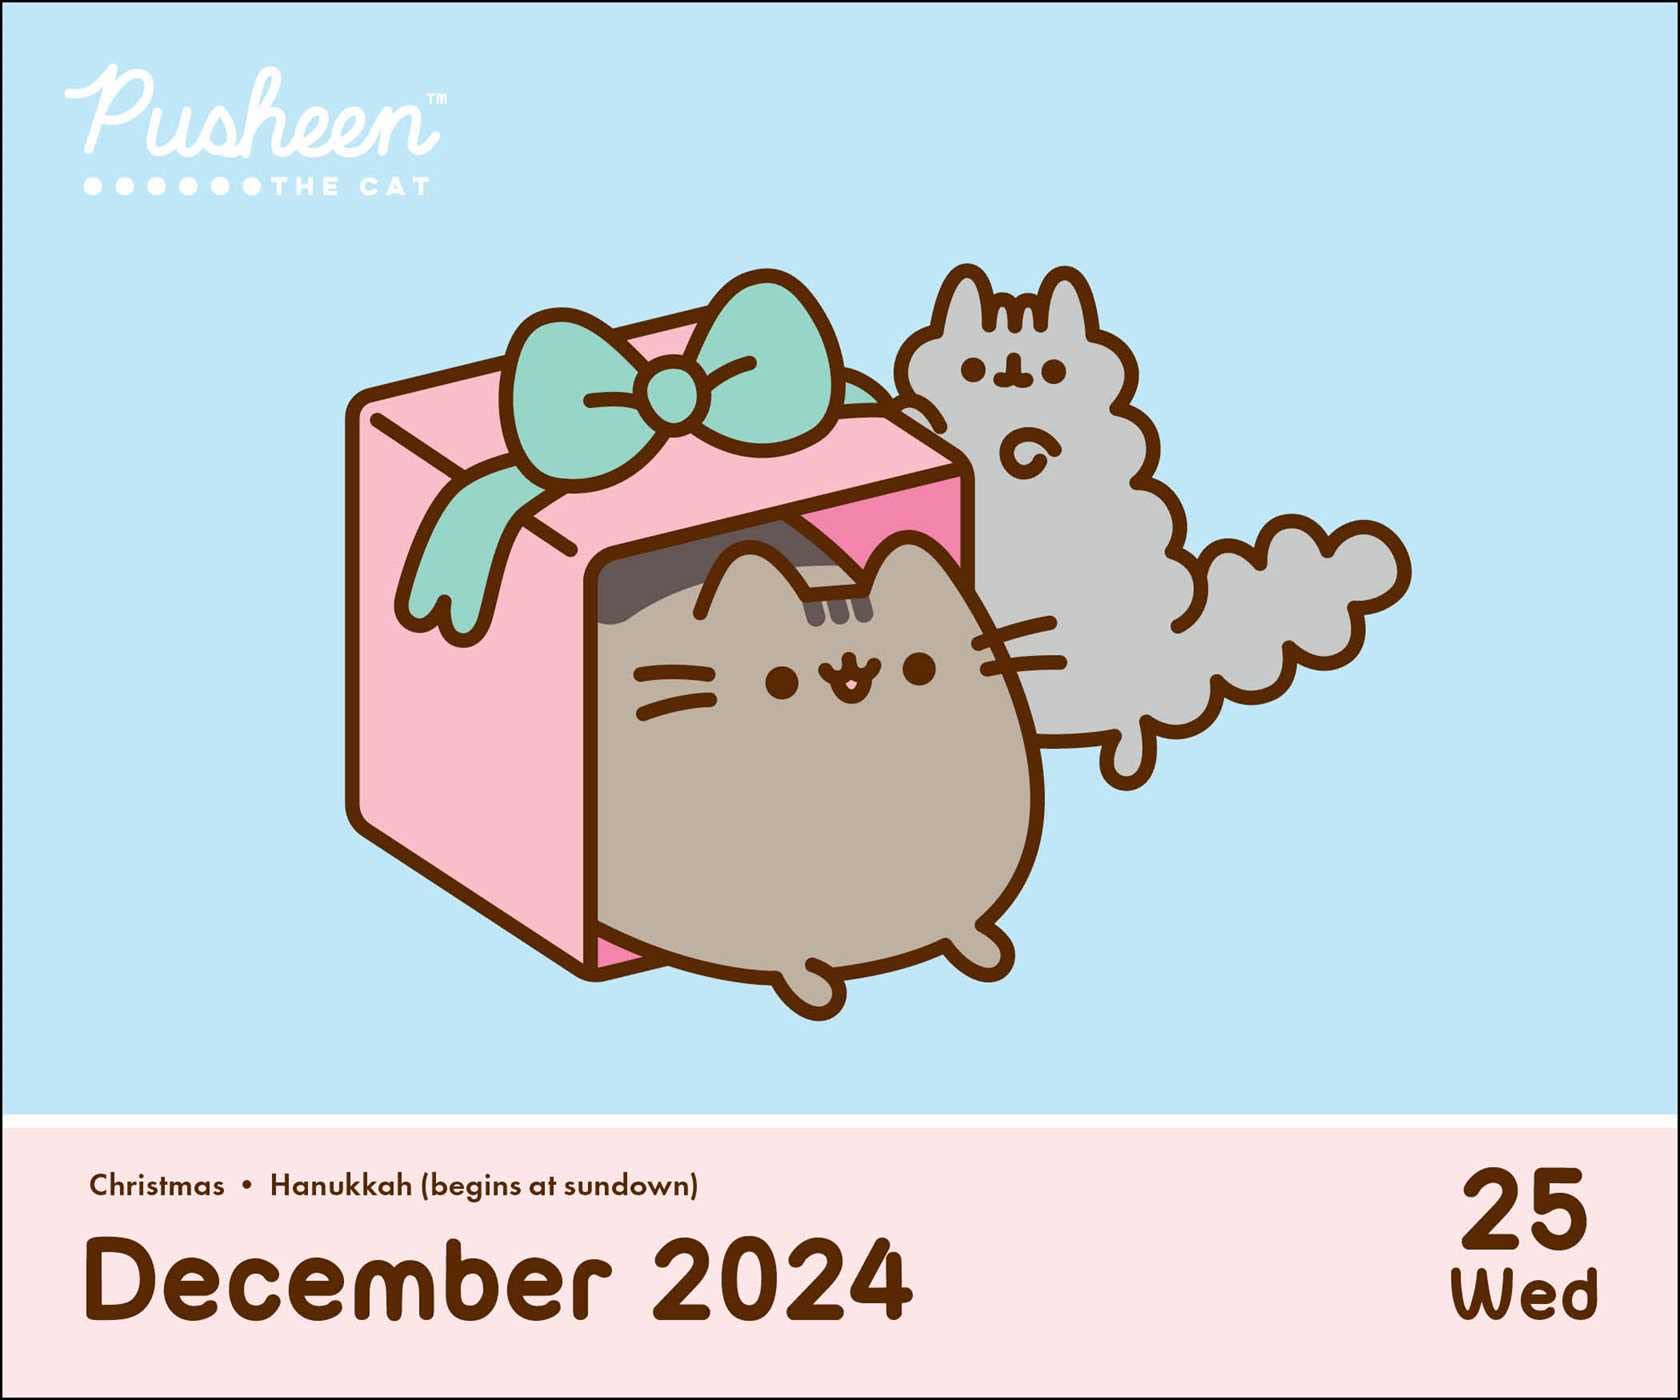 Pusheen 2024 Day-to-Day Calendar